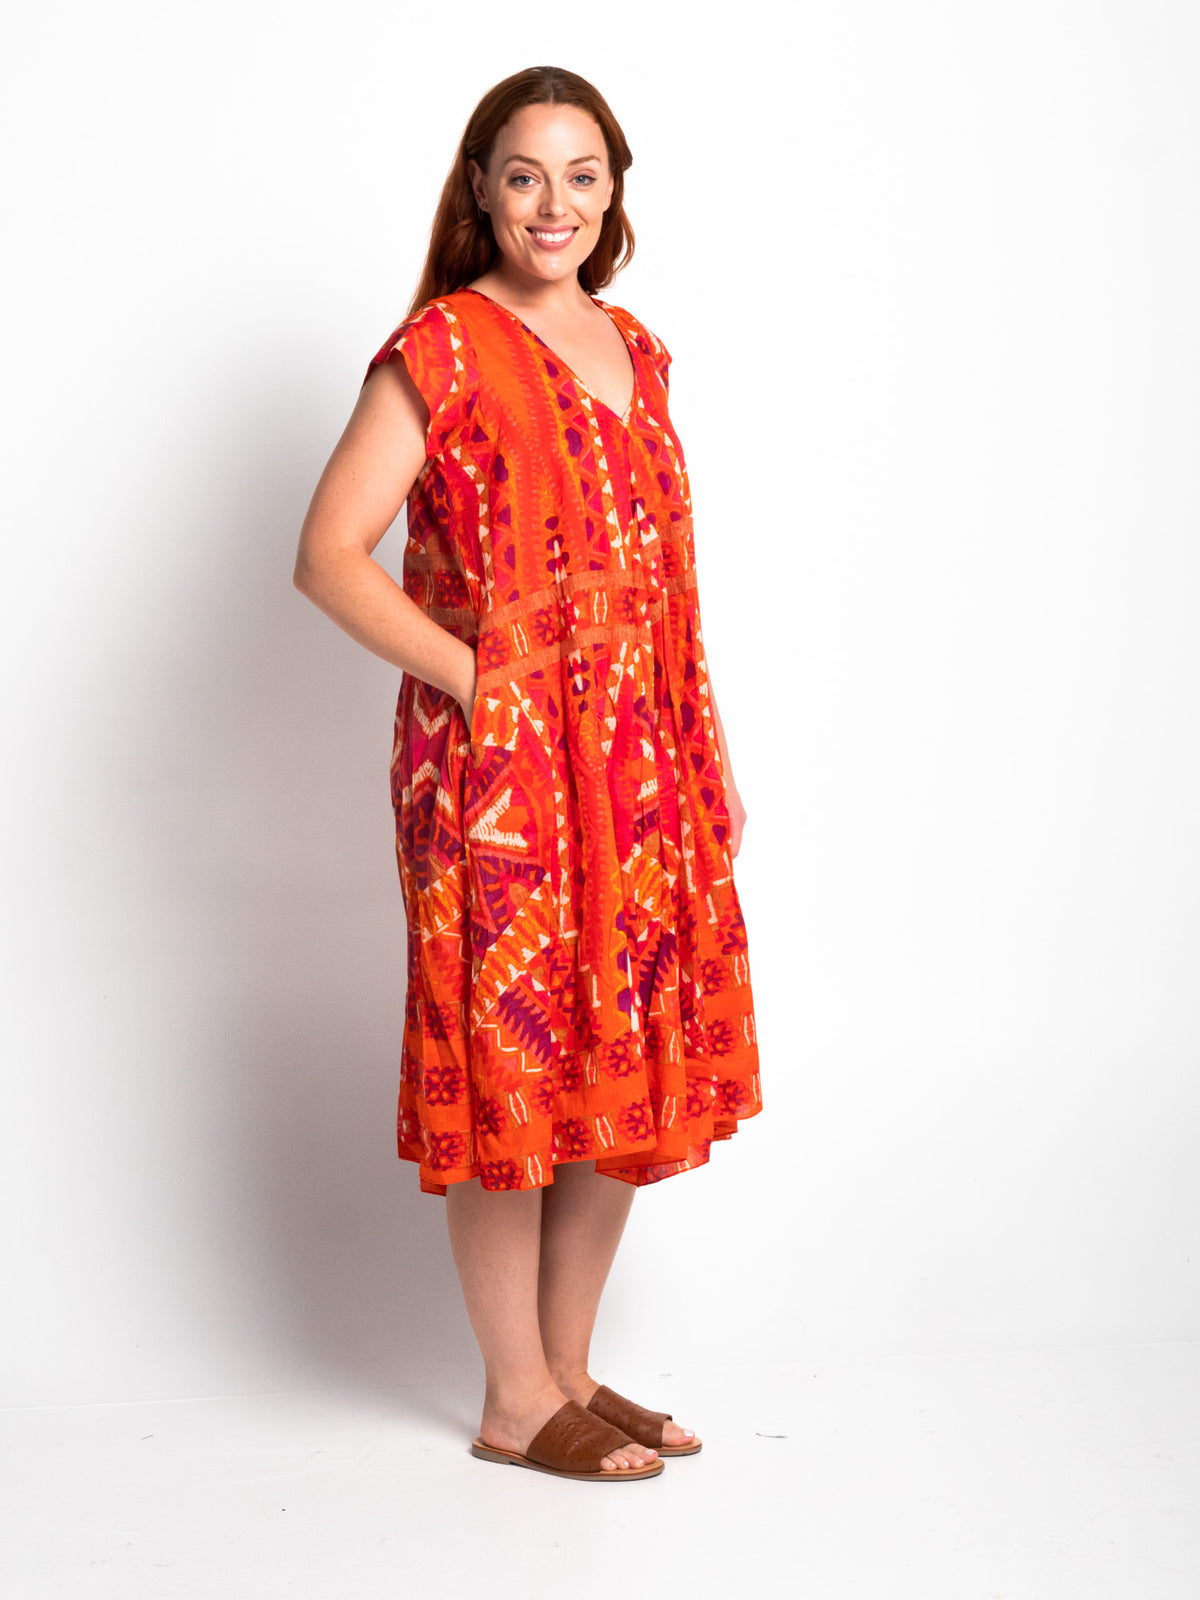 Maheno Dress in Blood Orange